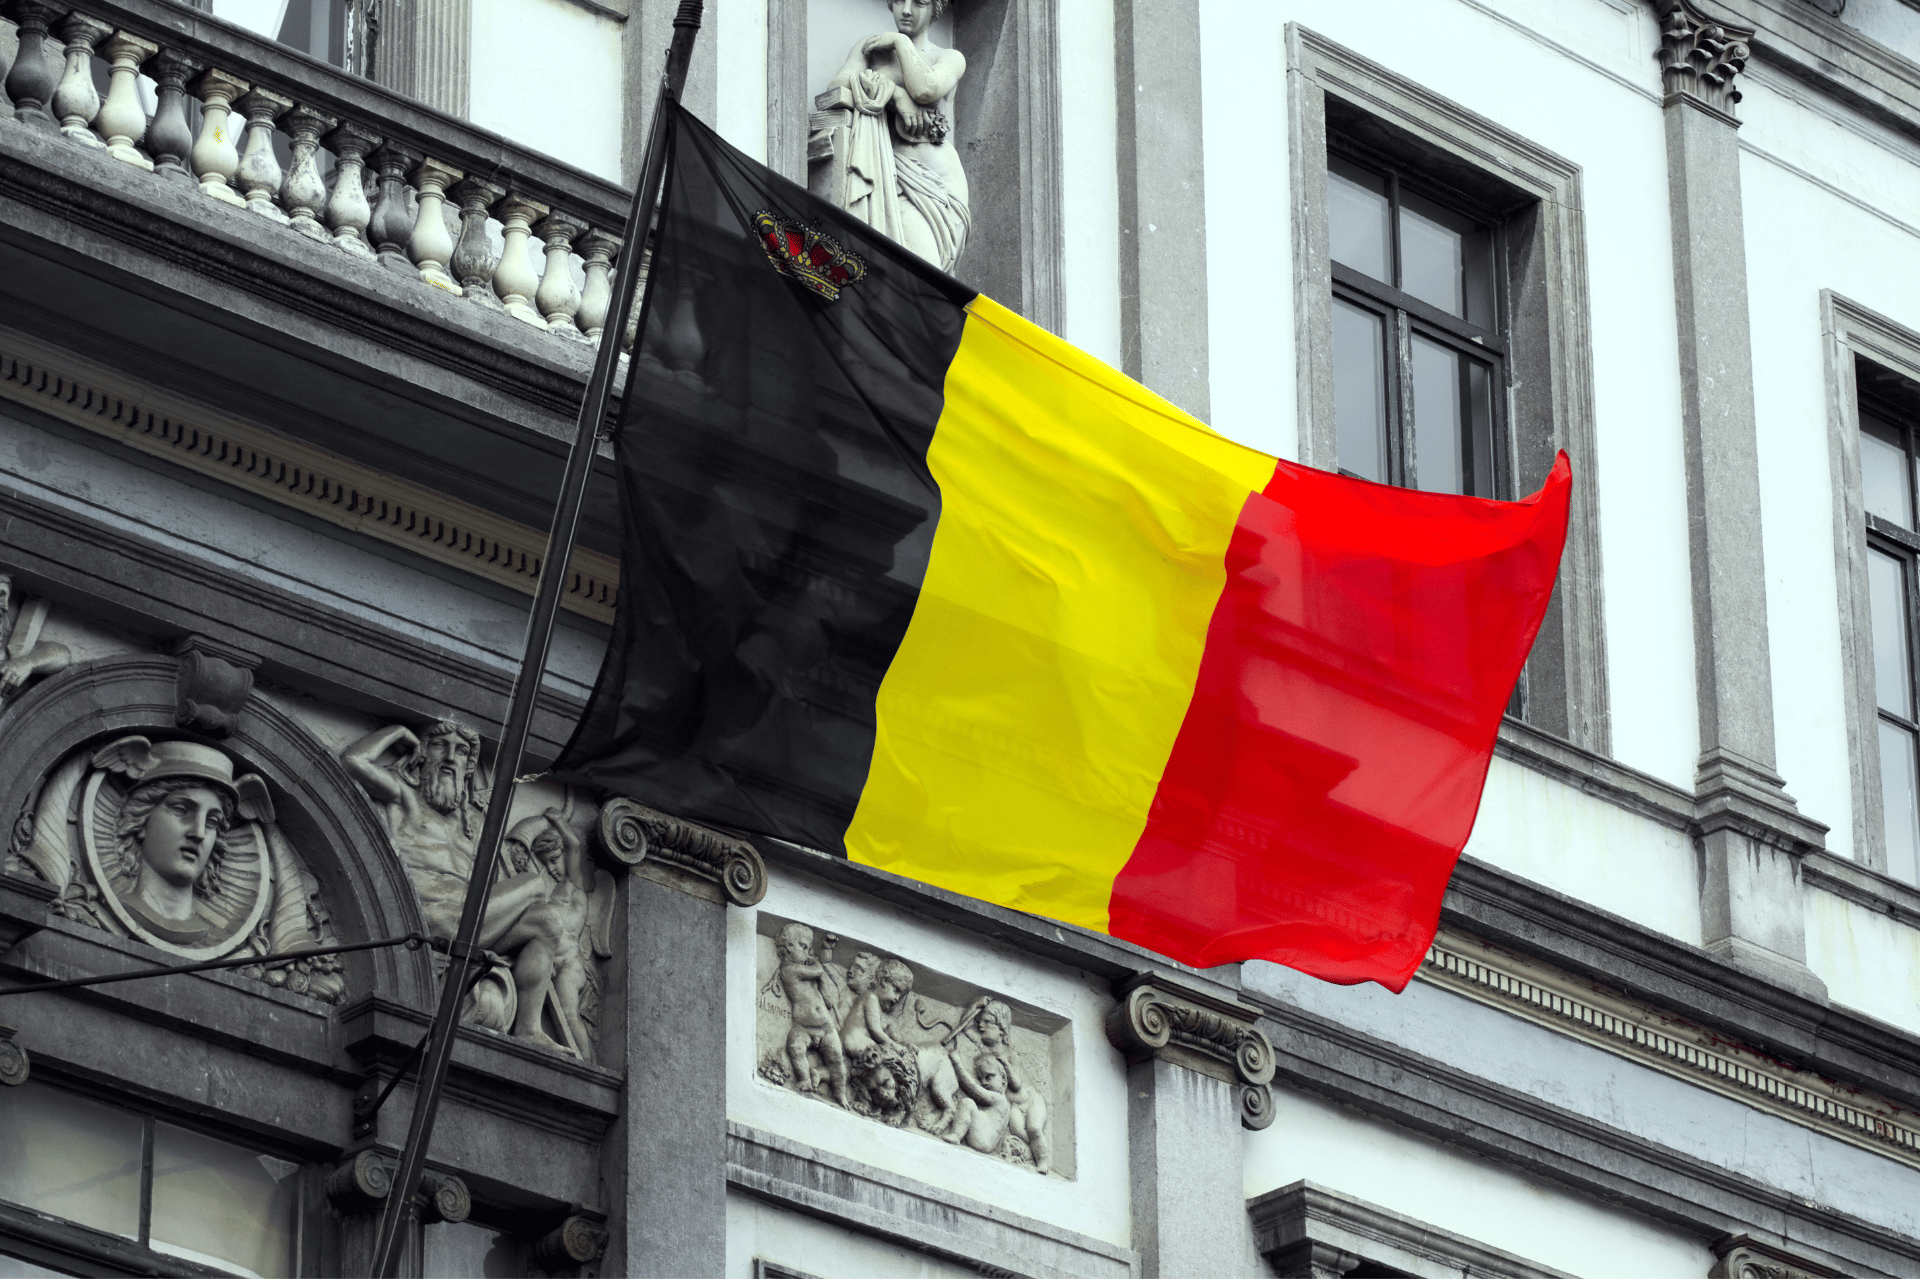 Comment immatriculer une voiture belge en France ?